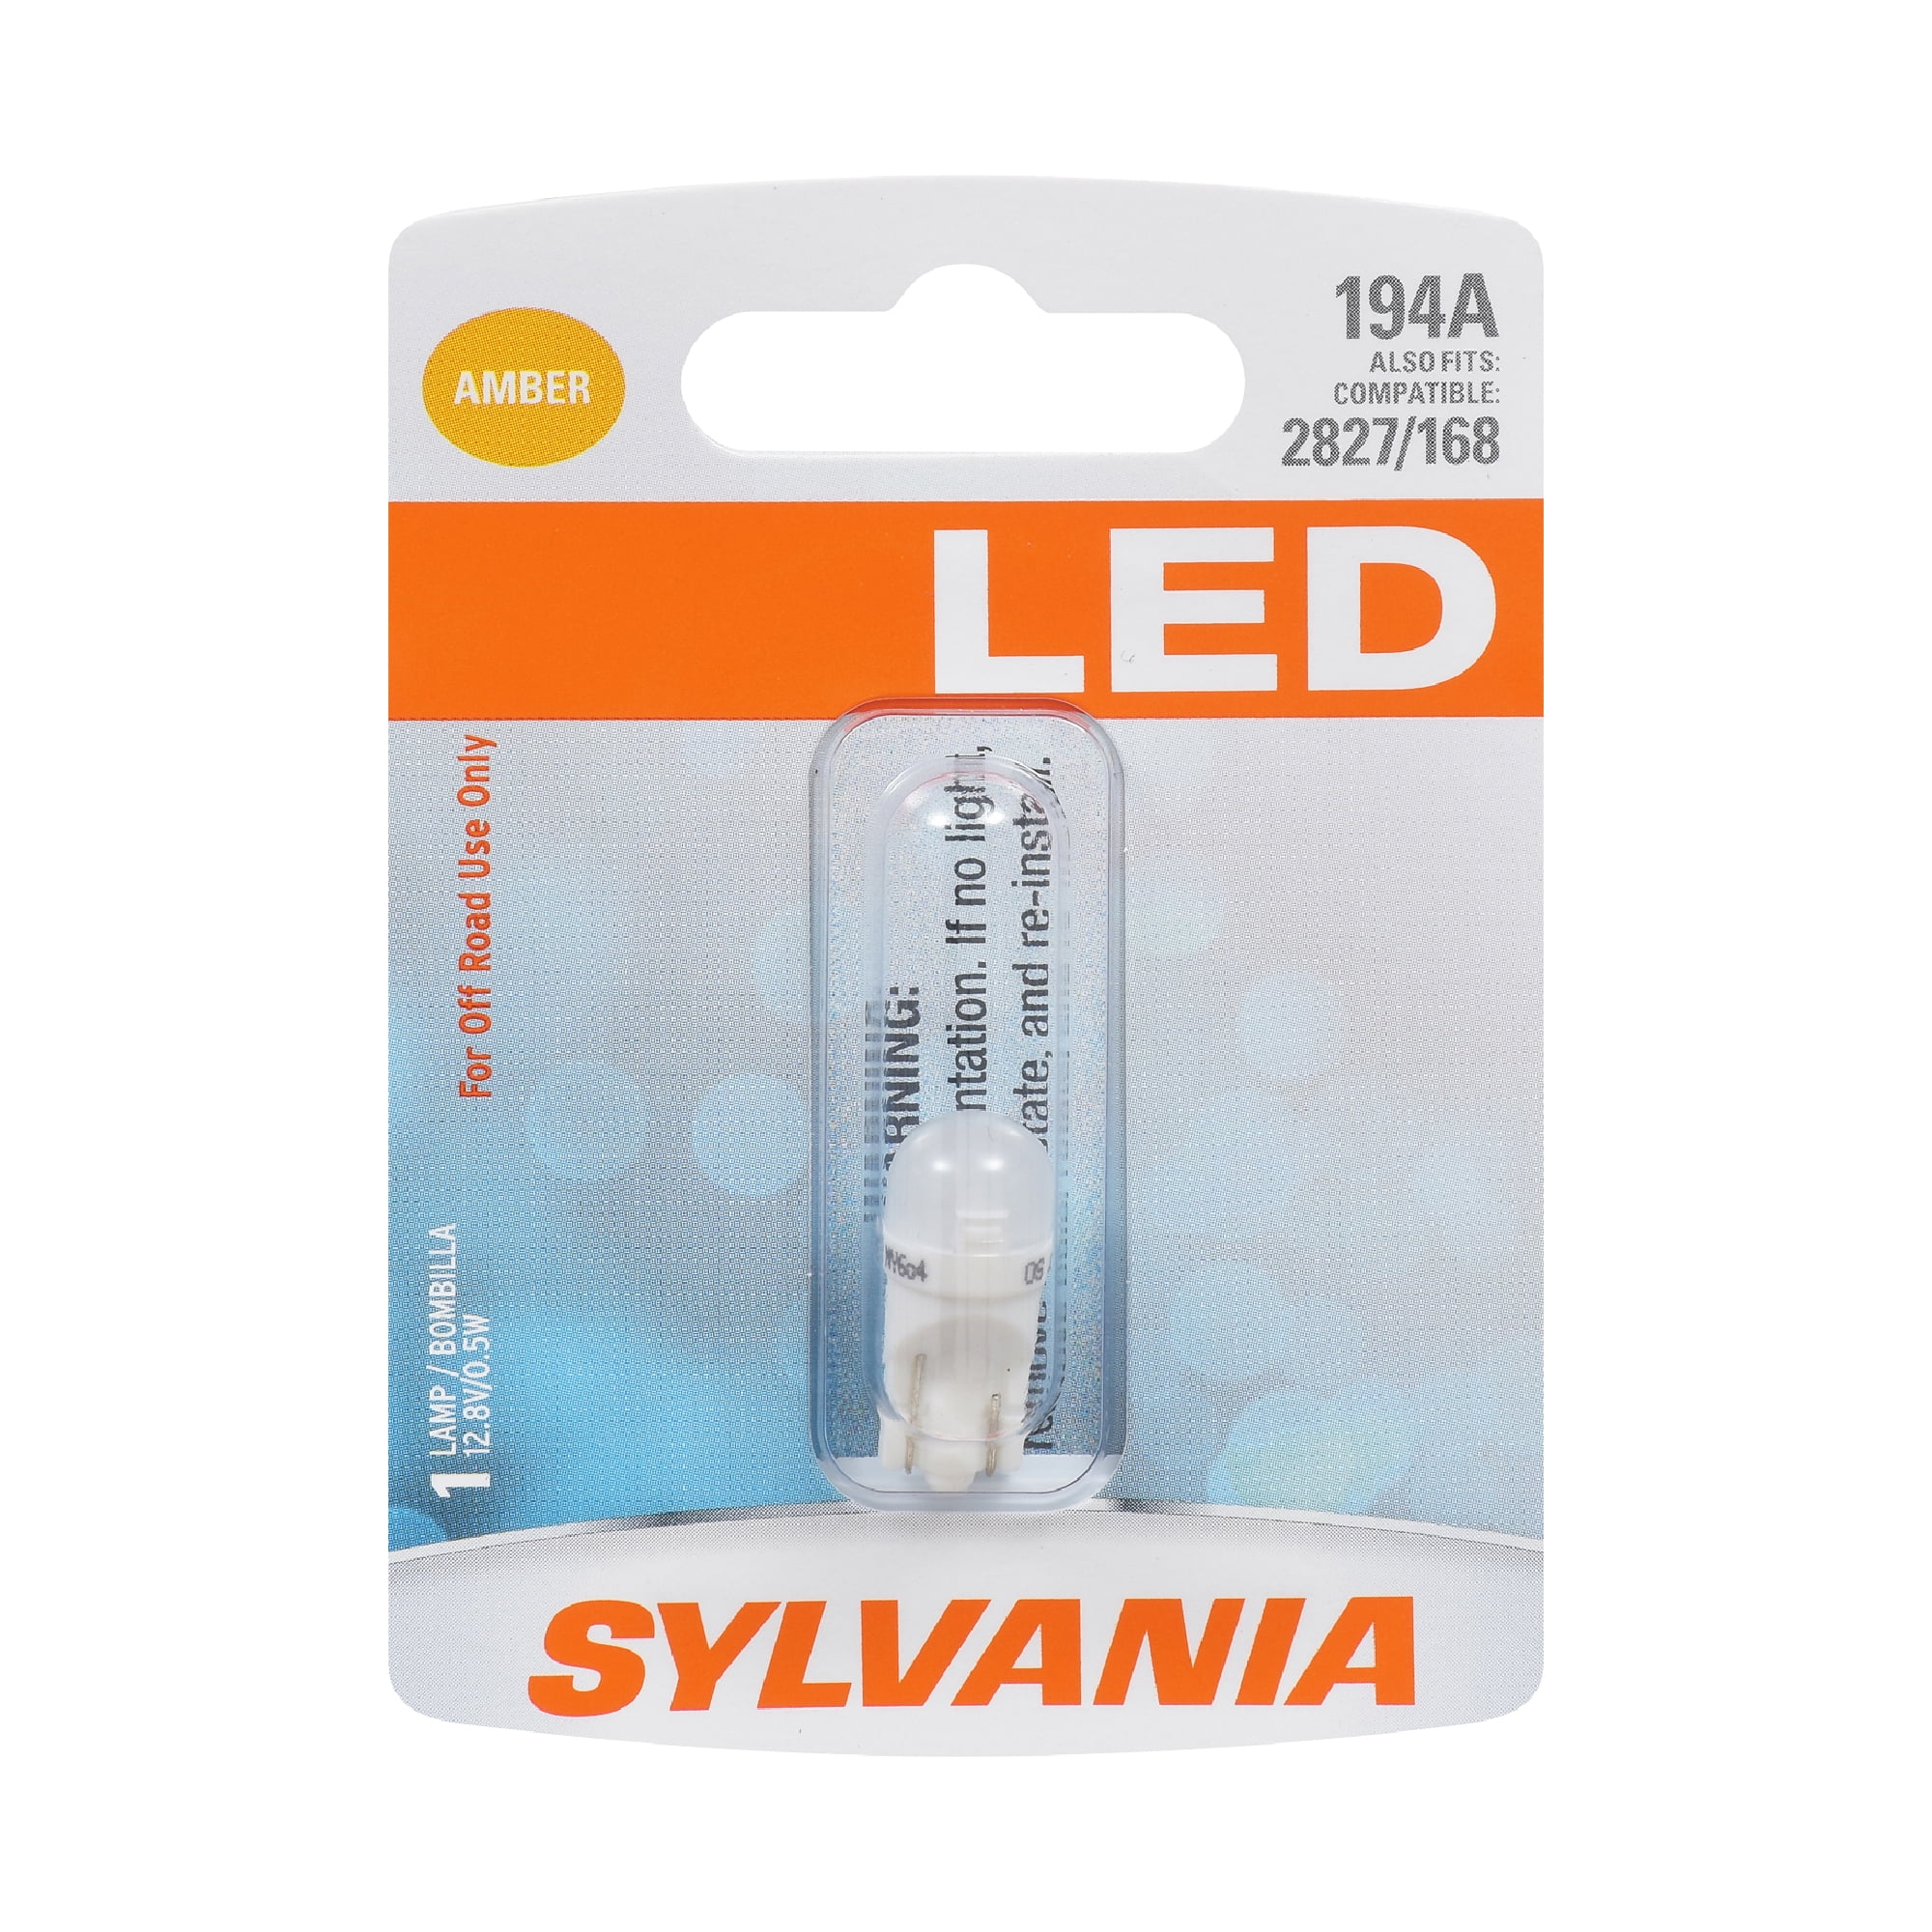 Sylvania 194A Amber LED Automotive Mini Bulb, Pack of 1.